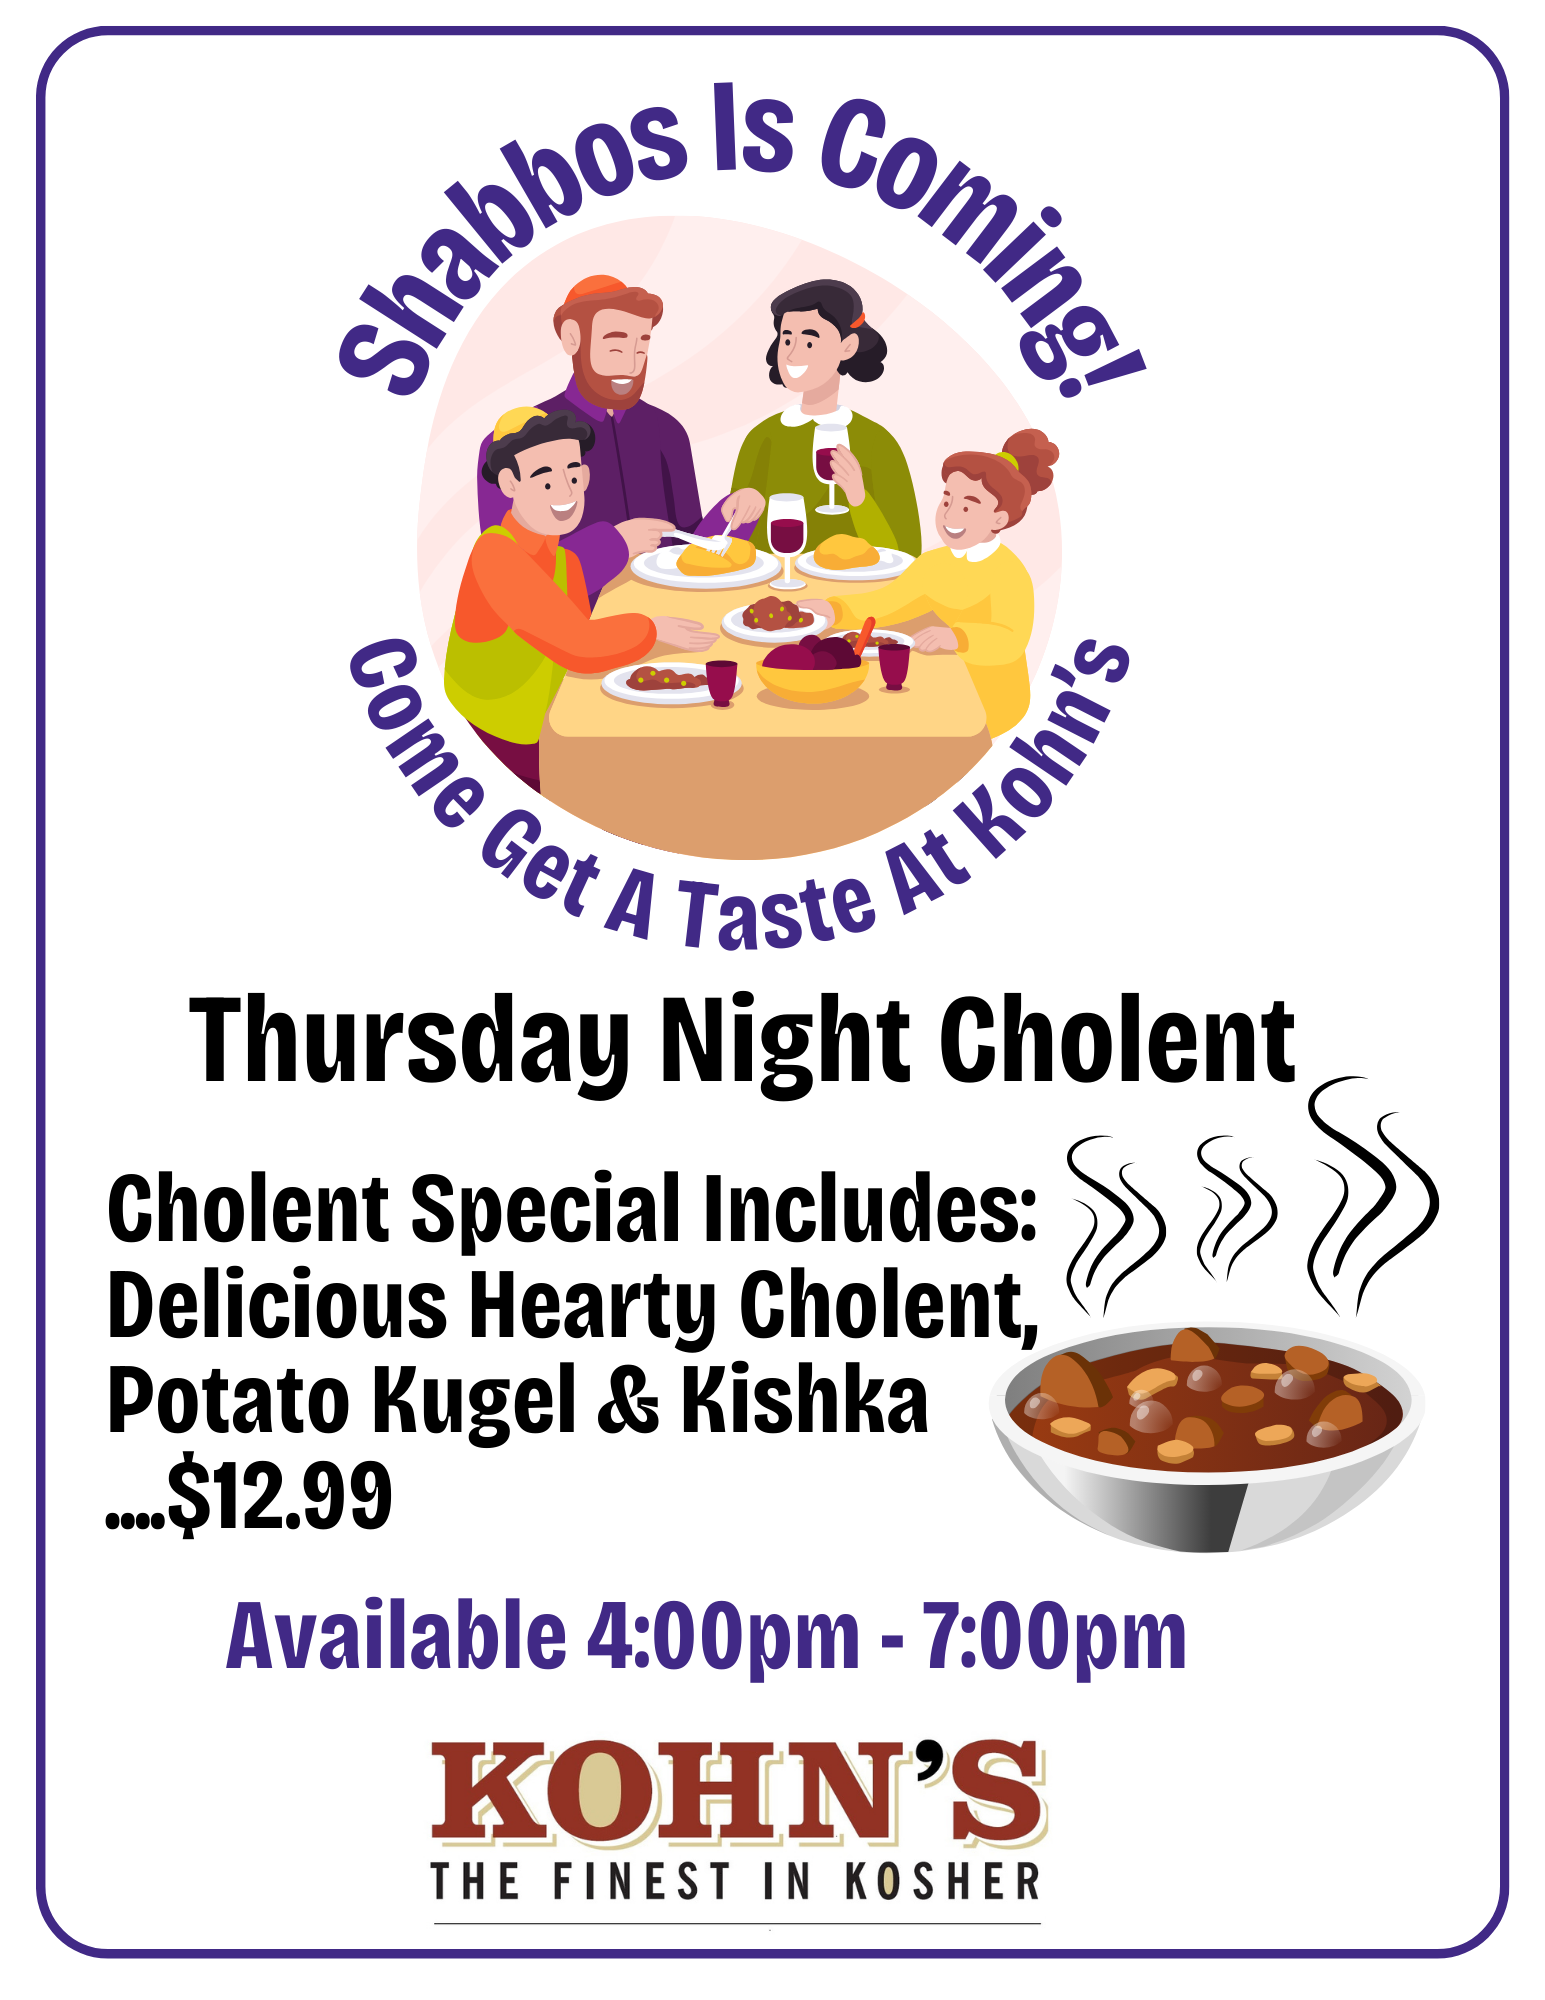 Thursday Night Cholent Menu 2-8